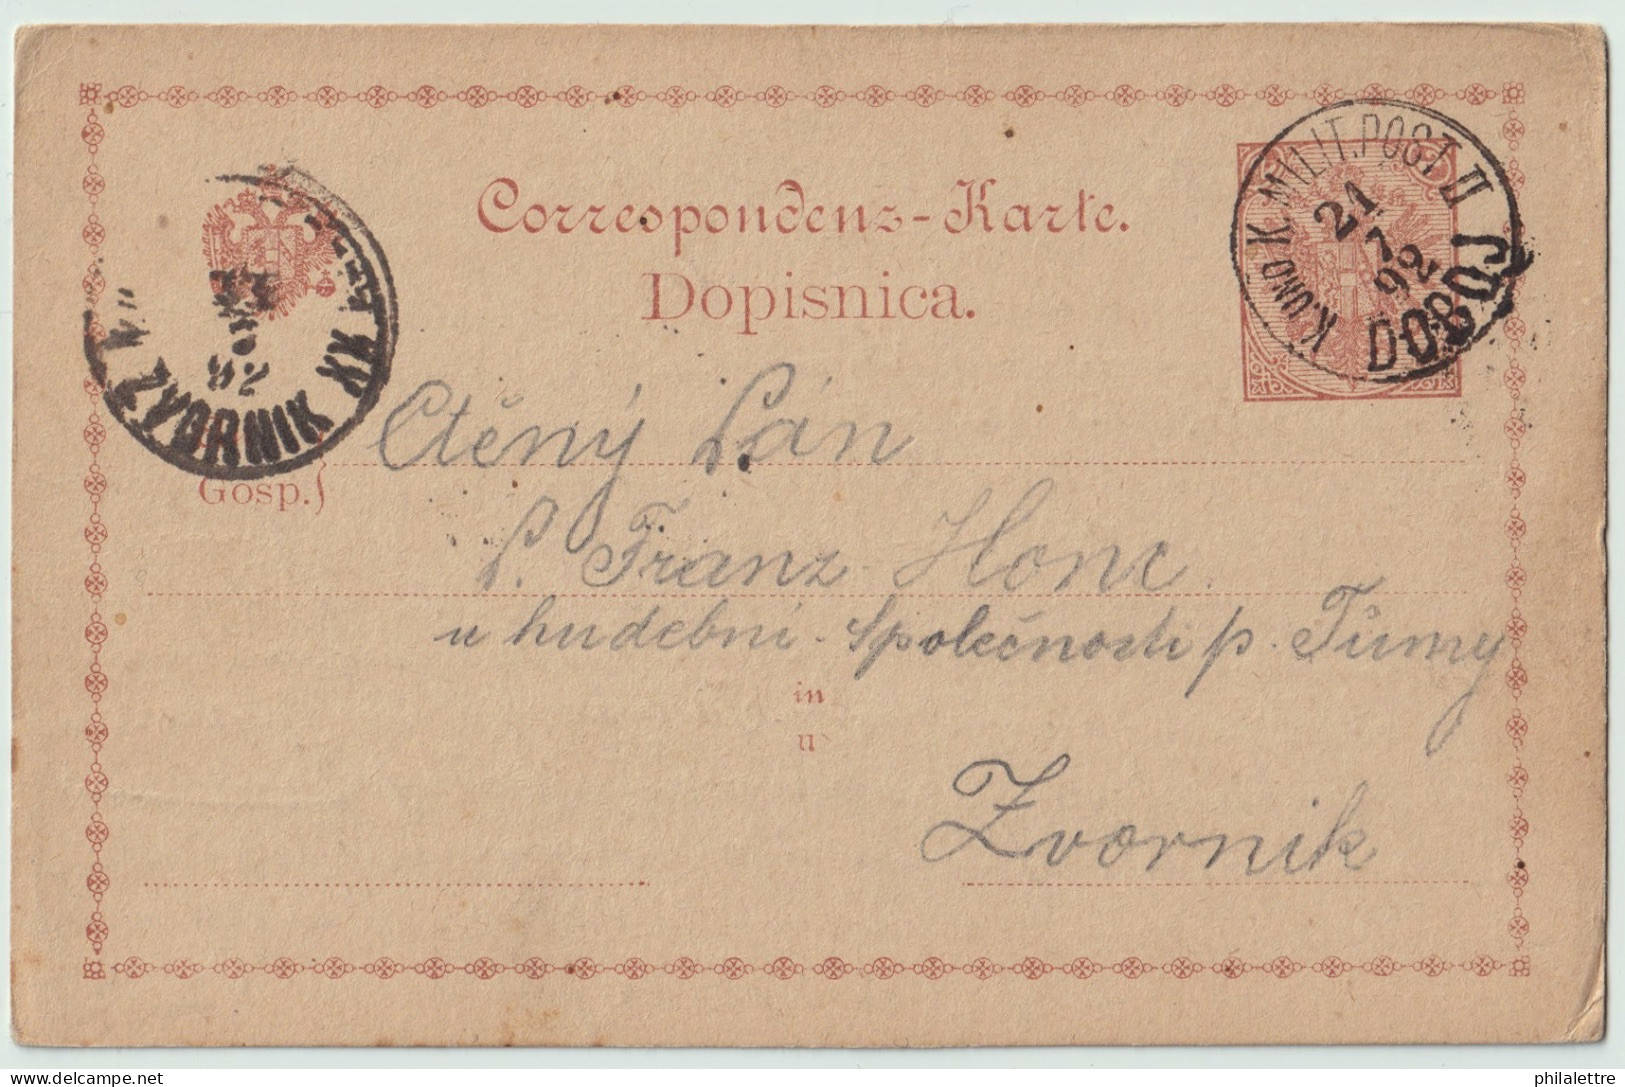 BOSNIE-HERZÉGOVINE / BOSNIA 1892 2kr Postal Card Used K.u.K. MILIT POST II / DOBOJ To ZVORNIK - Bosnie-Herzegovine